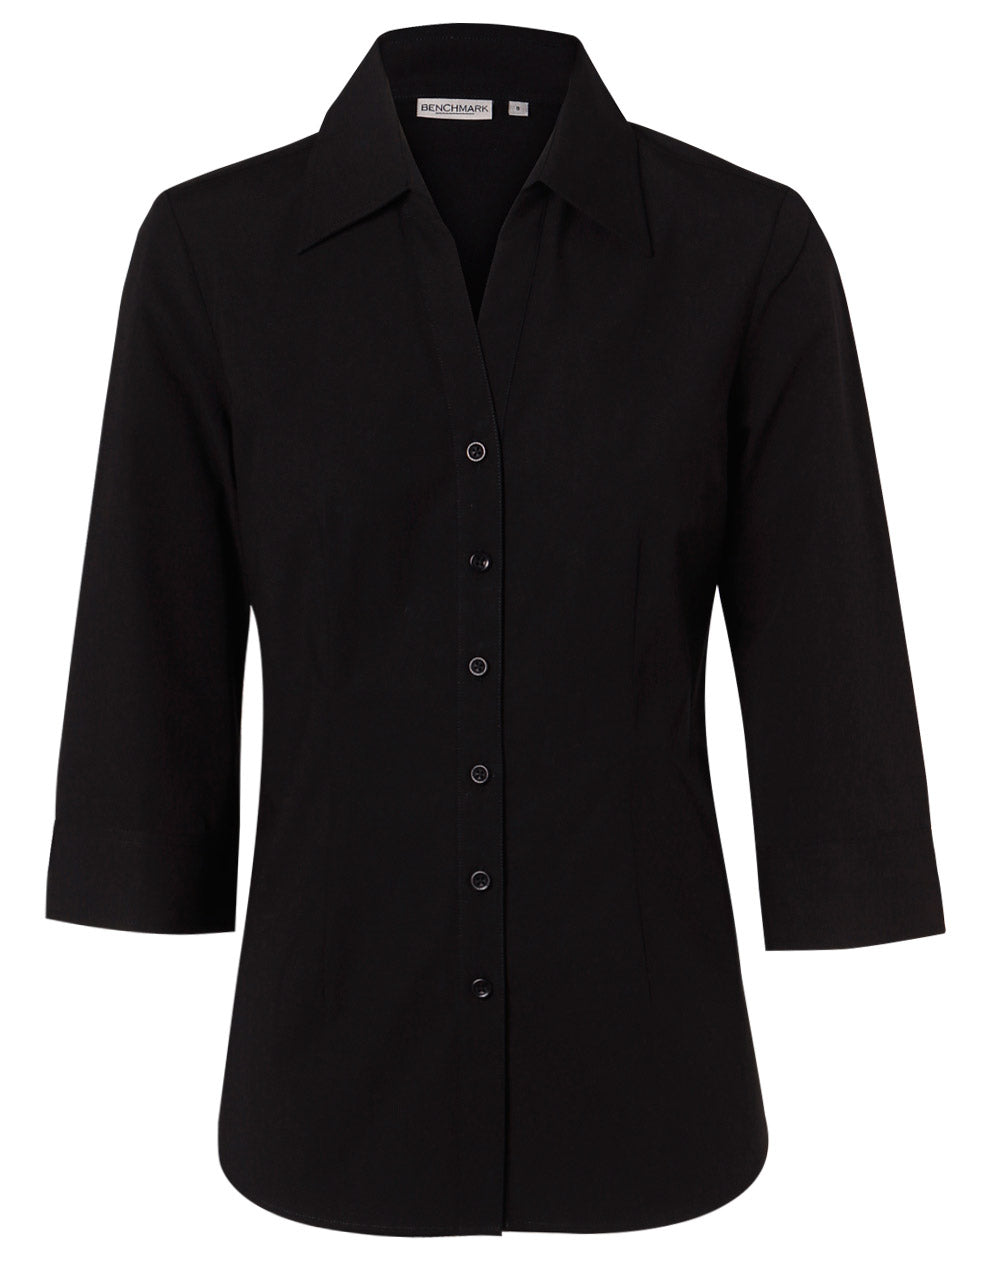 Winning Spirit- Women's Cotton/Poly Stretch 3/4 Sleeve Shirt-M8020Q